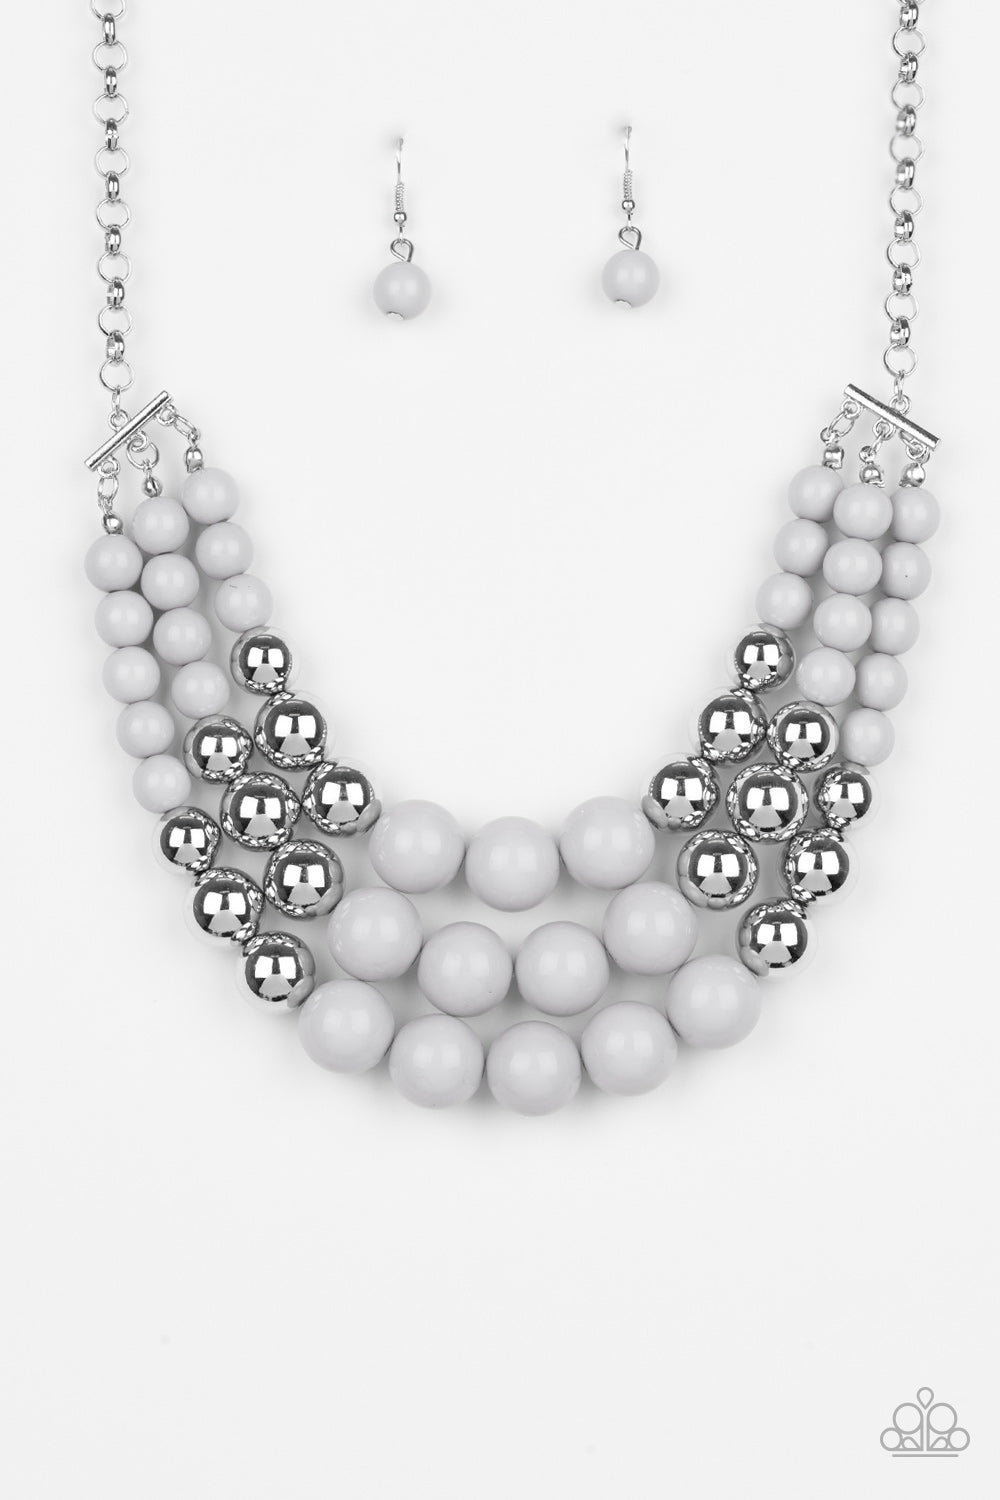 Paparazzi Accessories Dream Pop  Silver Necklaces - Lady T Accessories